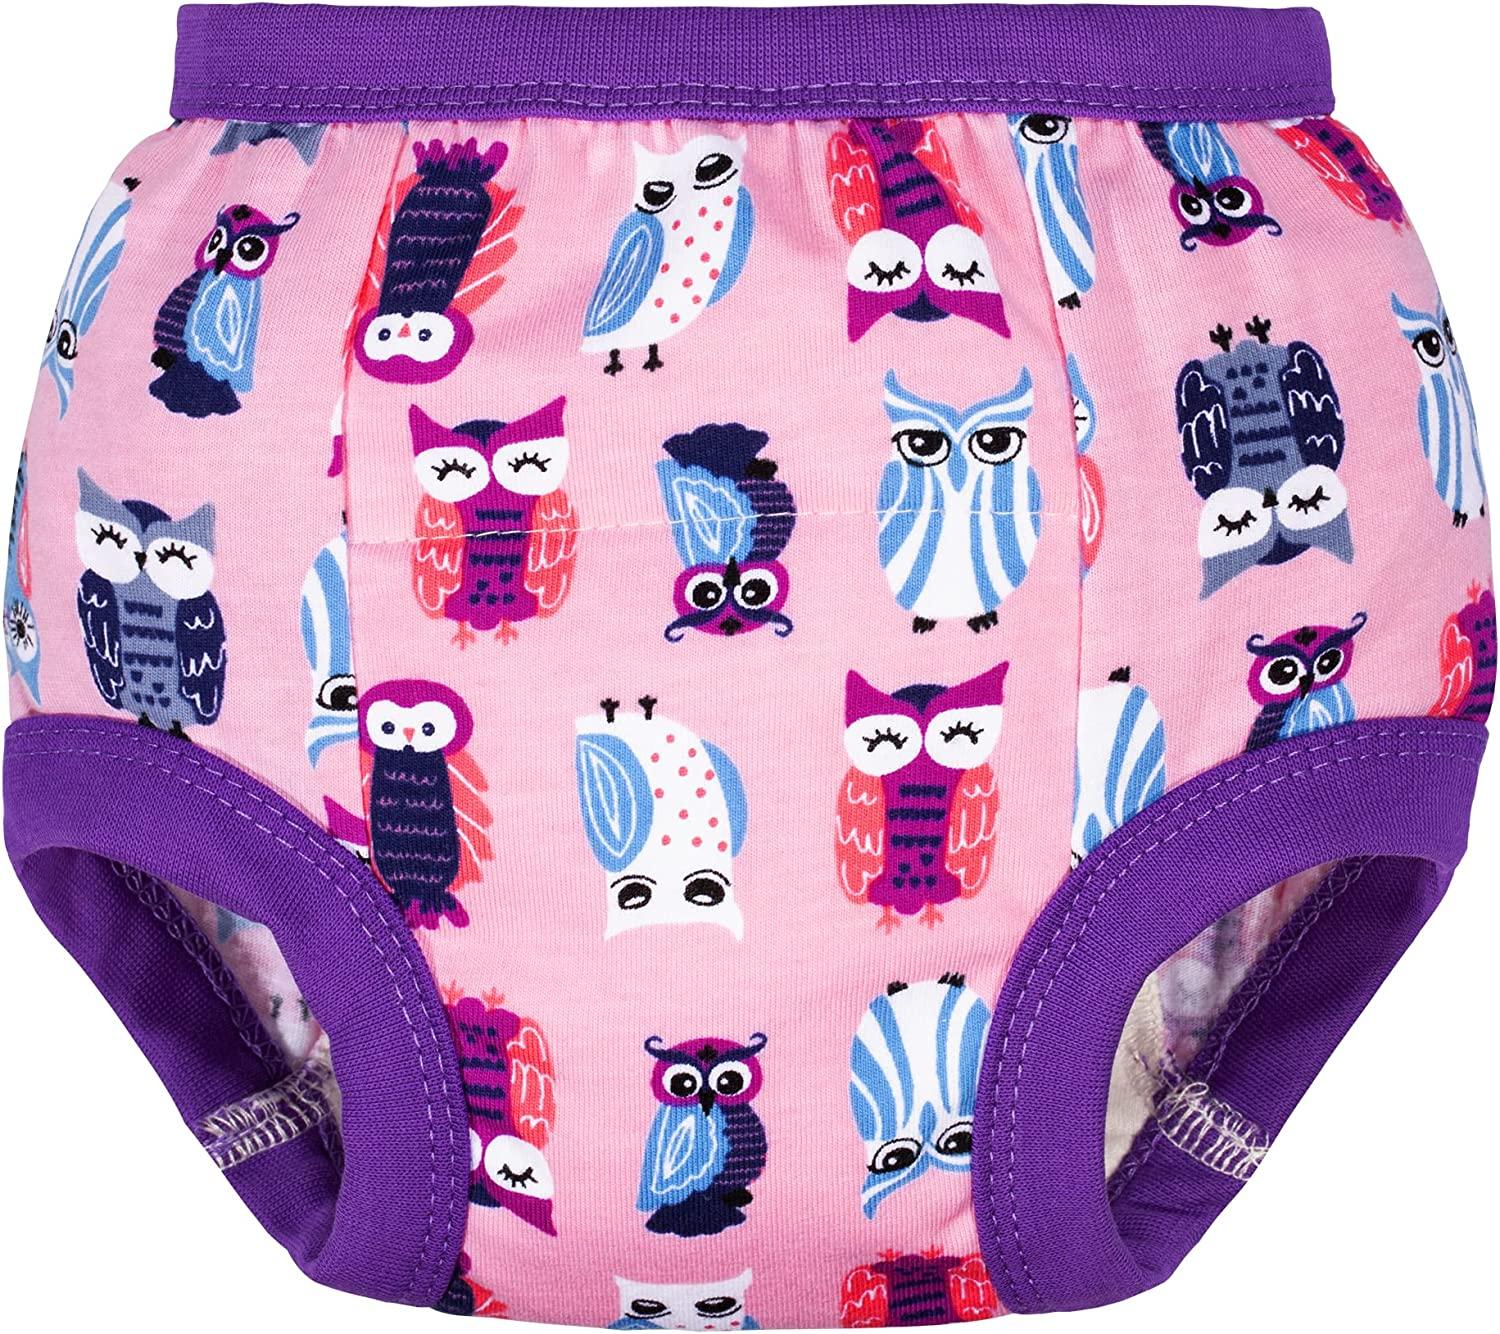 BIG ELEPHANT Baby Potty Training Pants Underwear for Girl's - 100